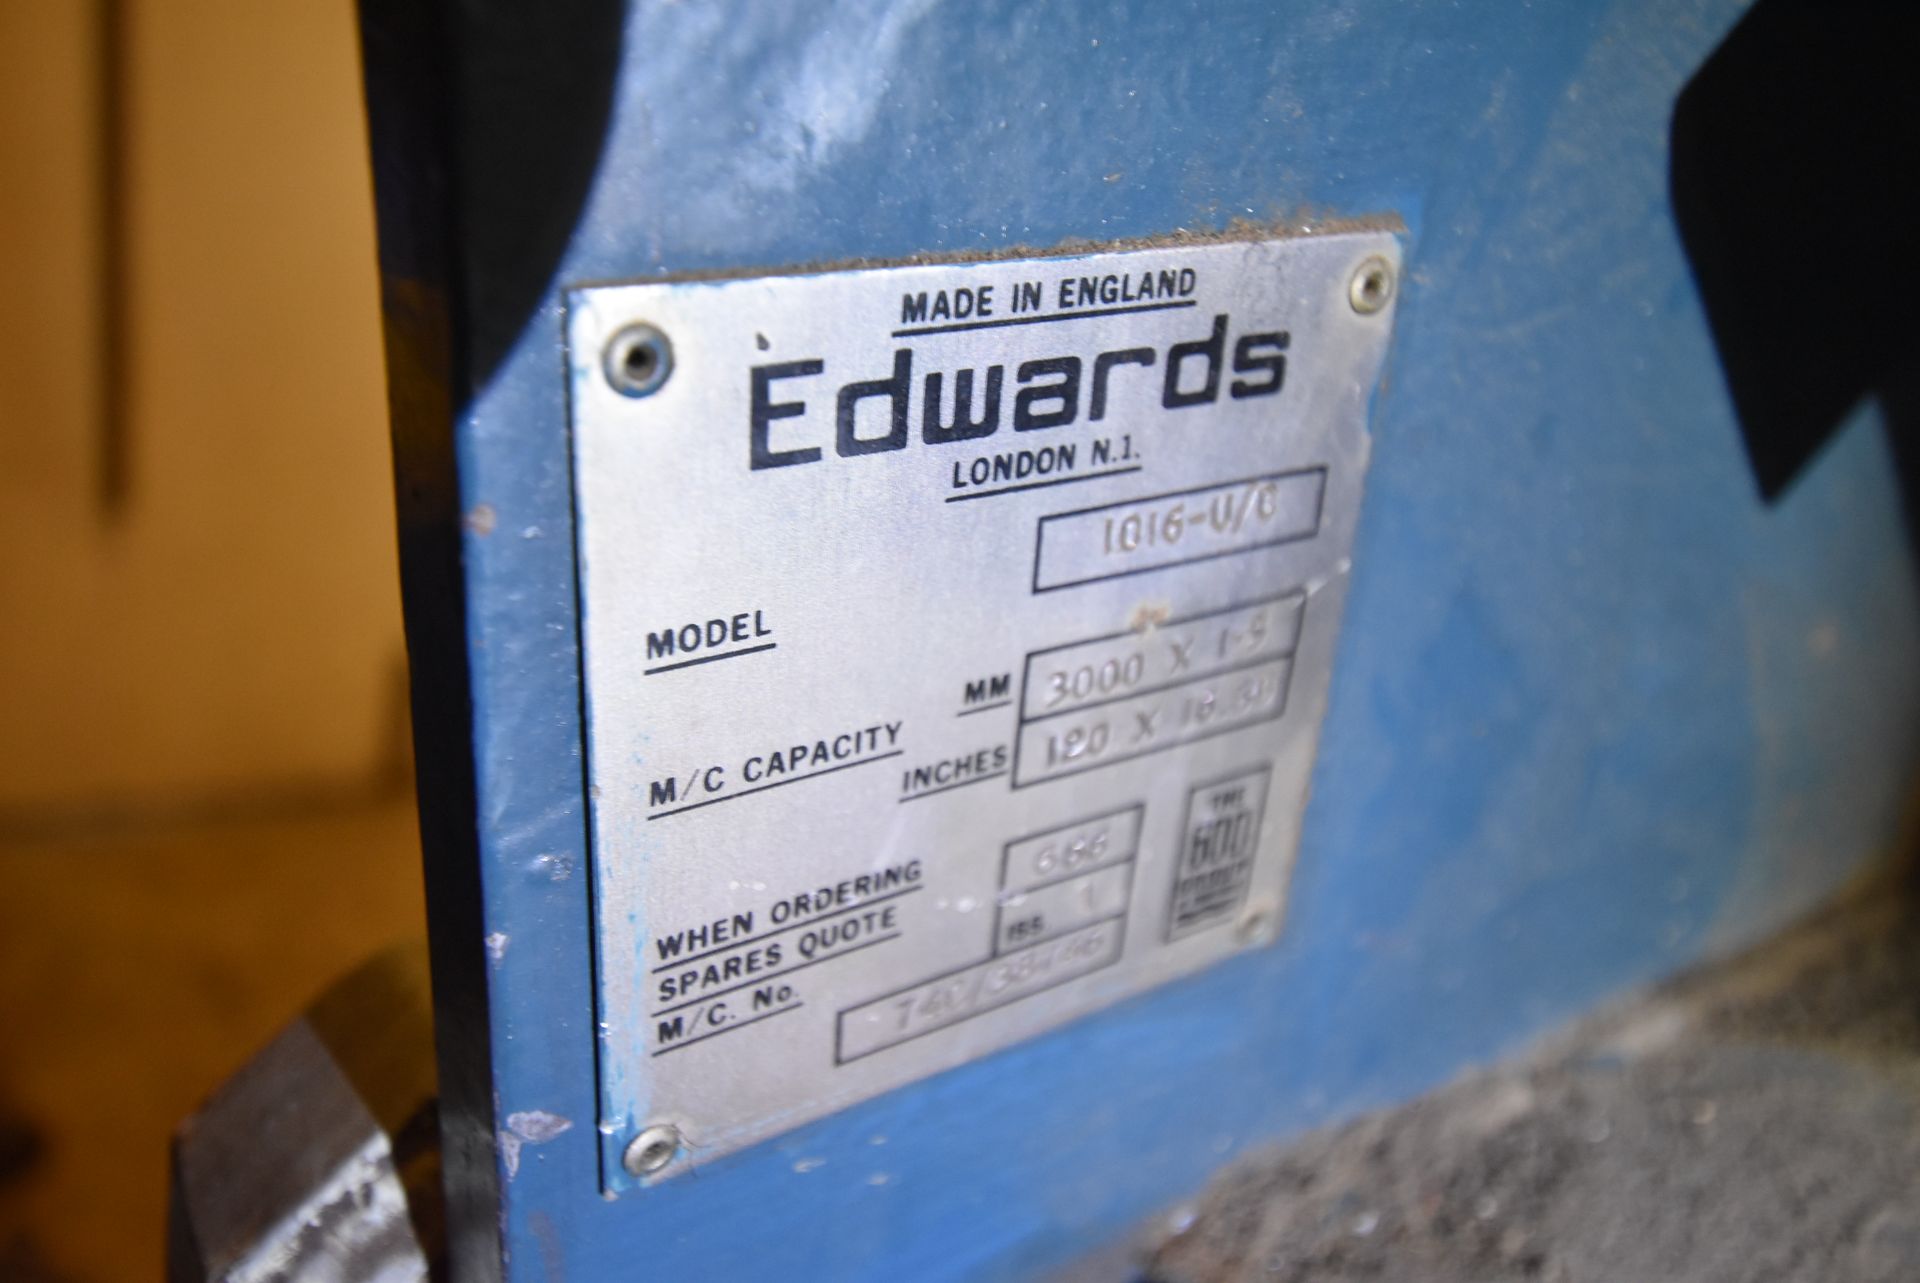 Edwards 1016-U/C 3000mm x 1.5mm HAND OPERATED FOLD - Image 3 of 3